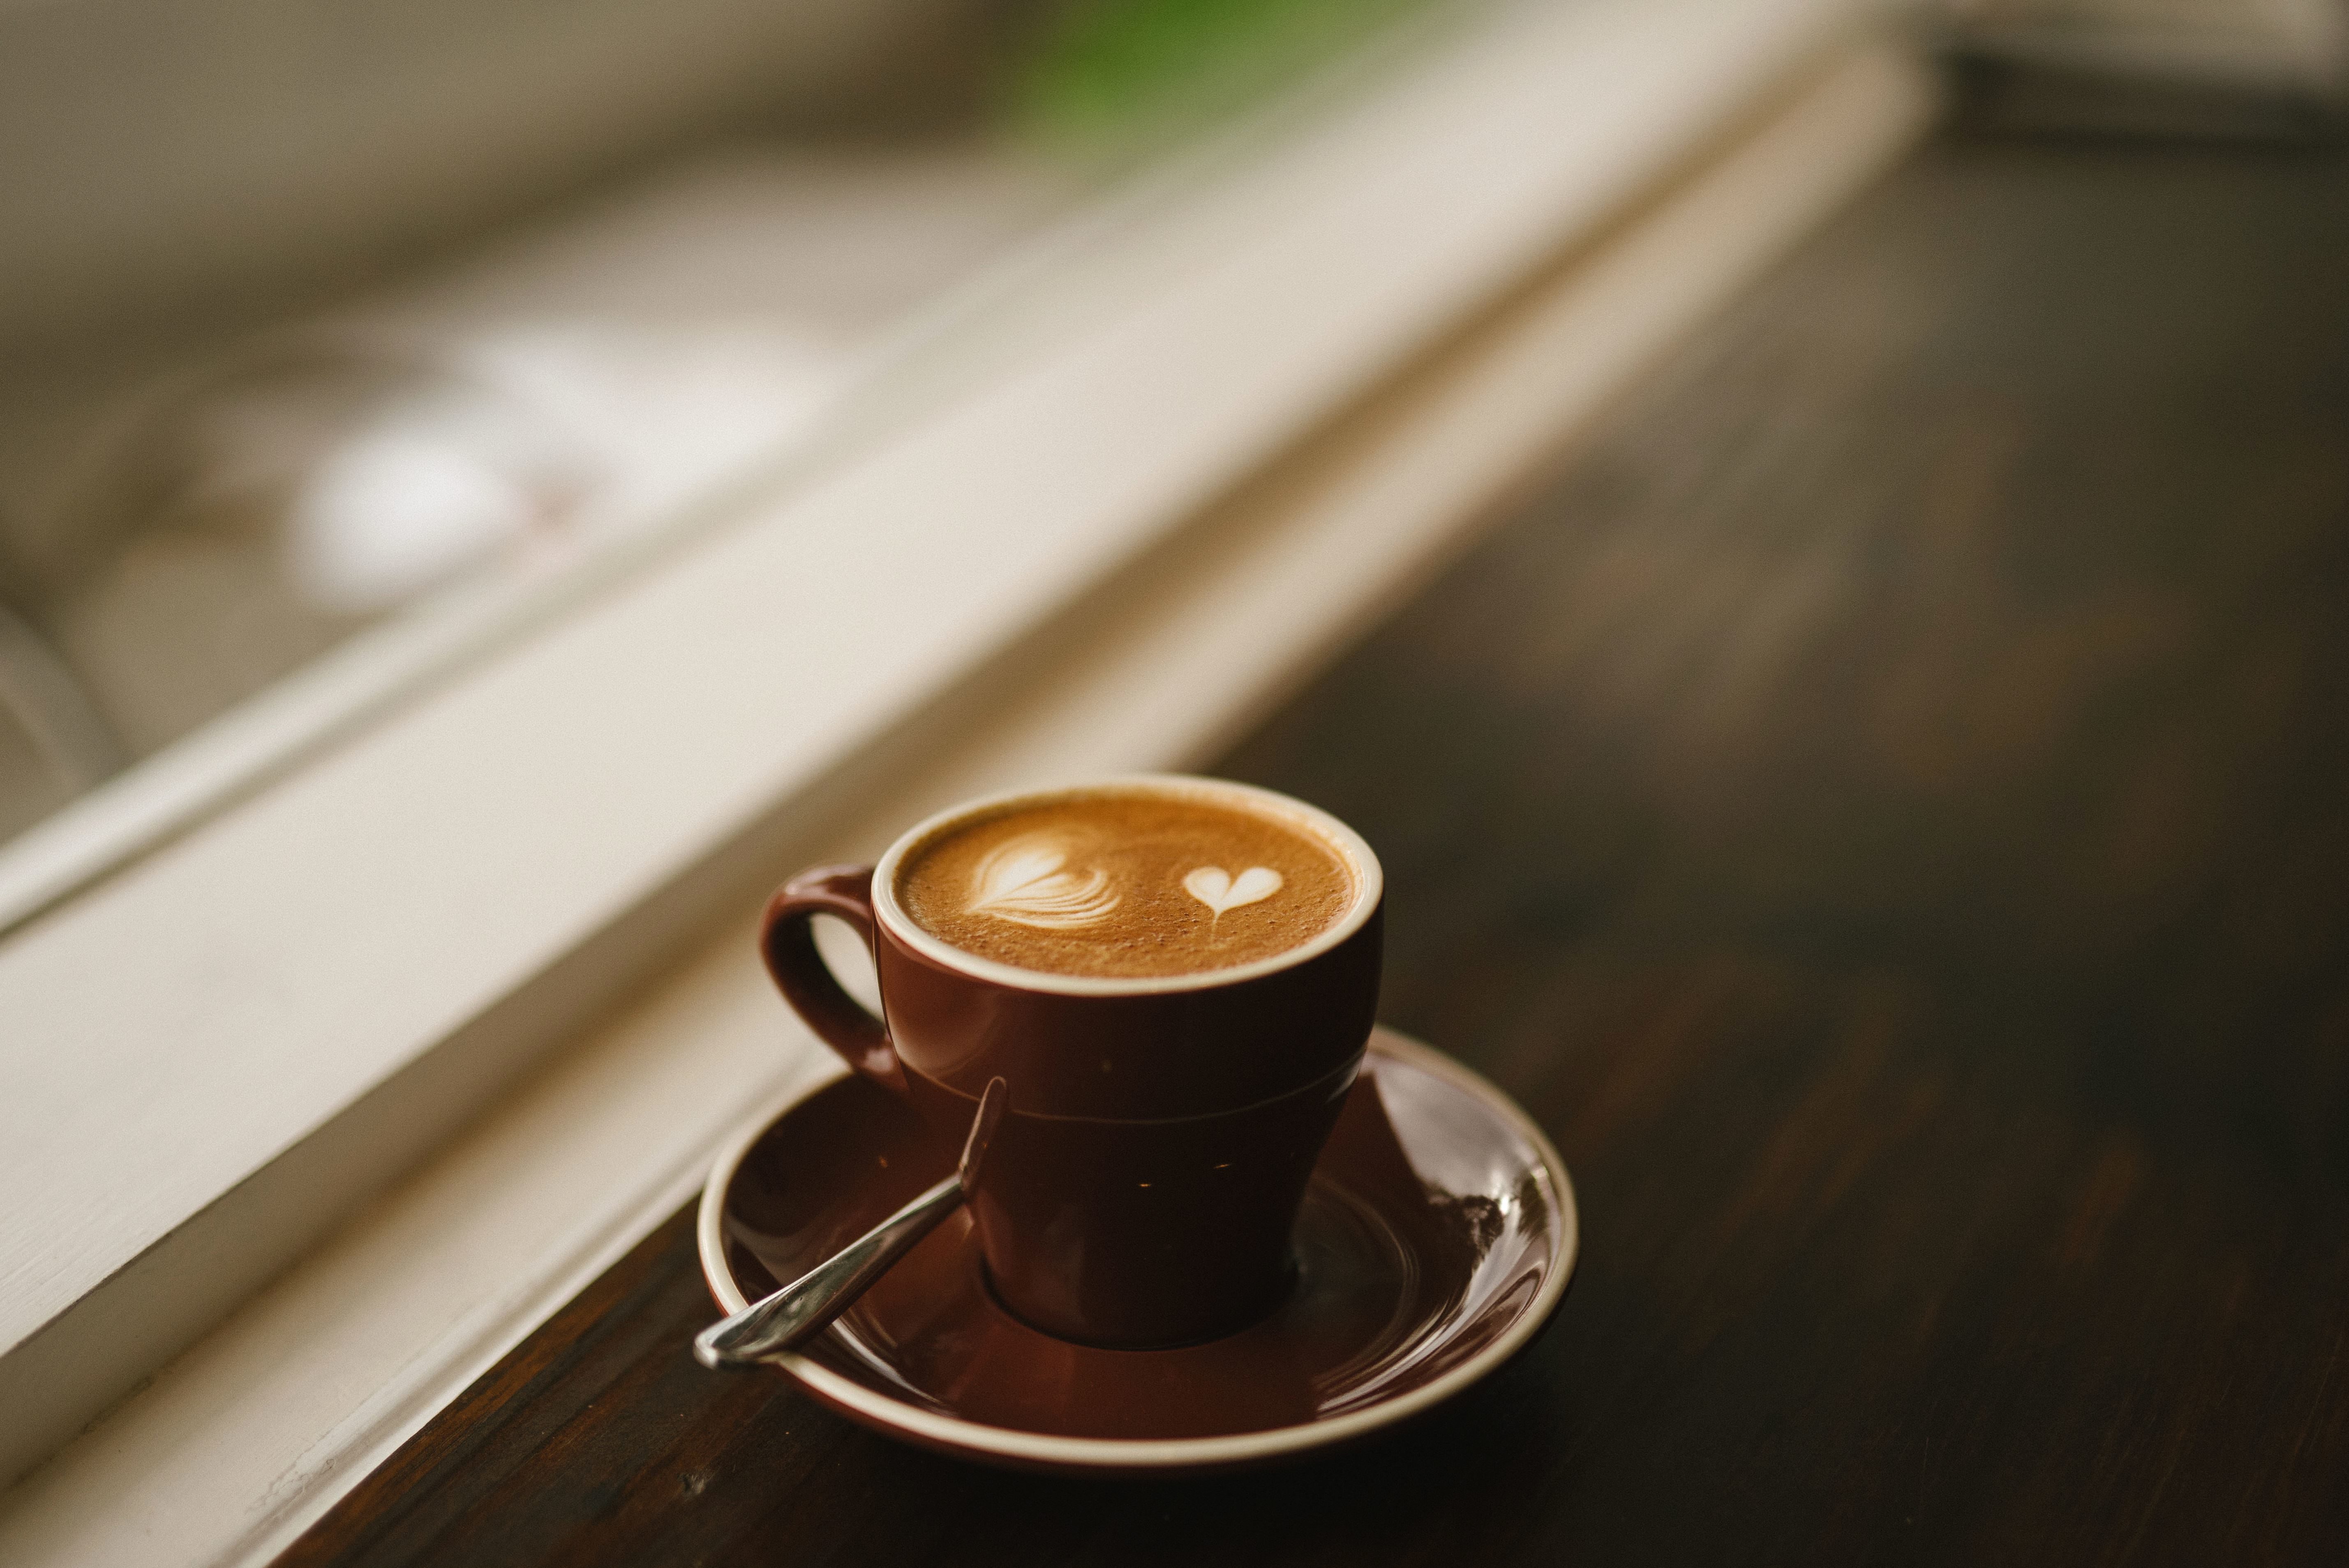 Free picture: cappuccino, coffee cup, drink, espresso, mug, table